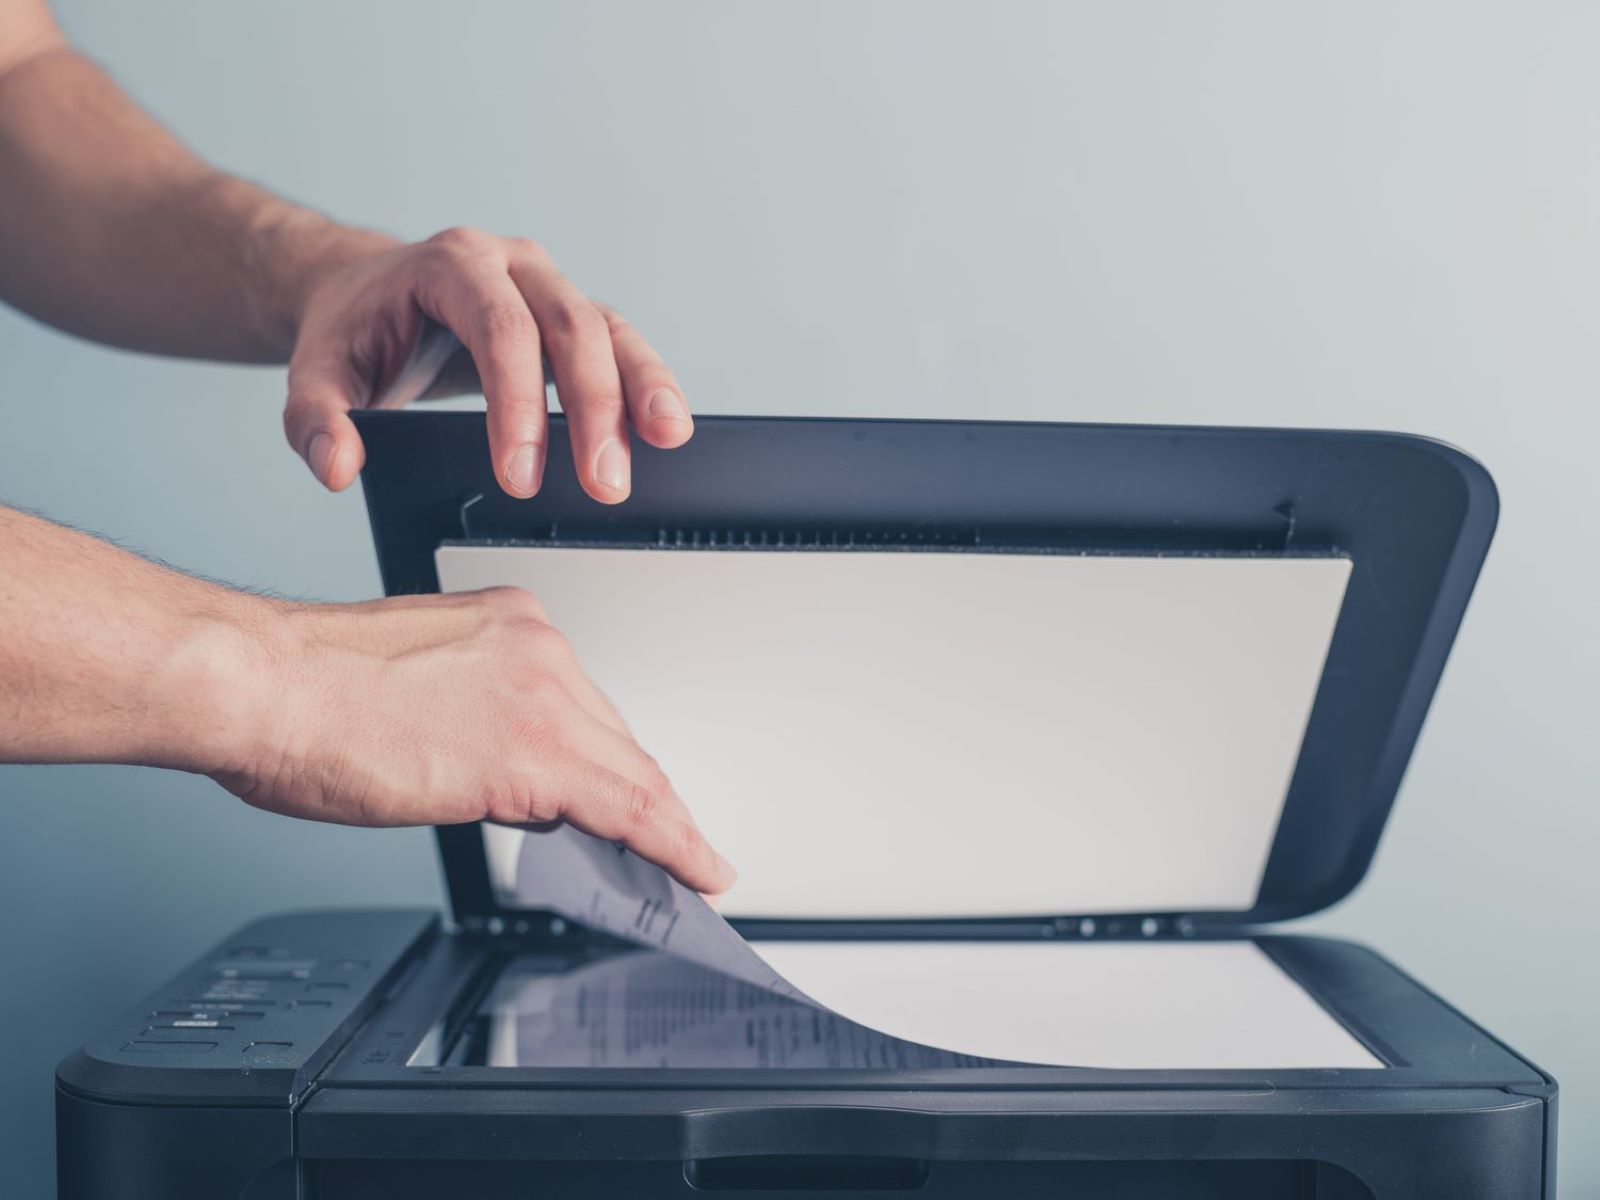 How To Make A Copy On A Printer